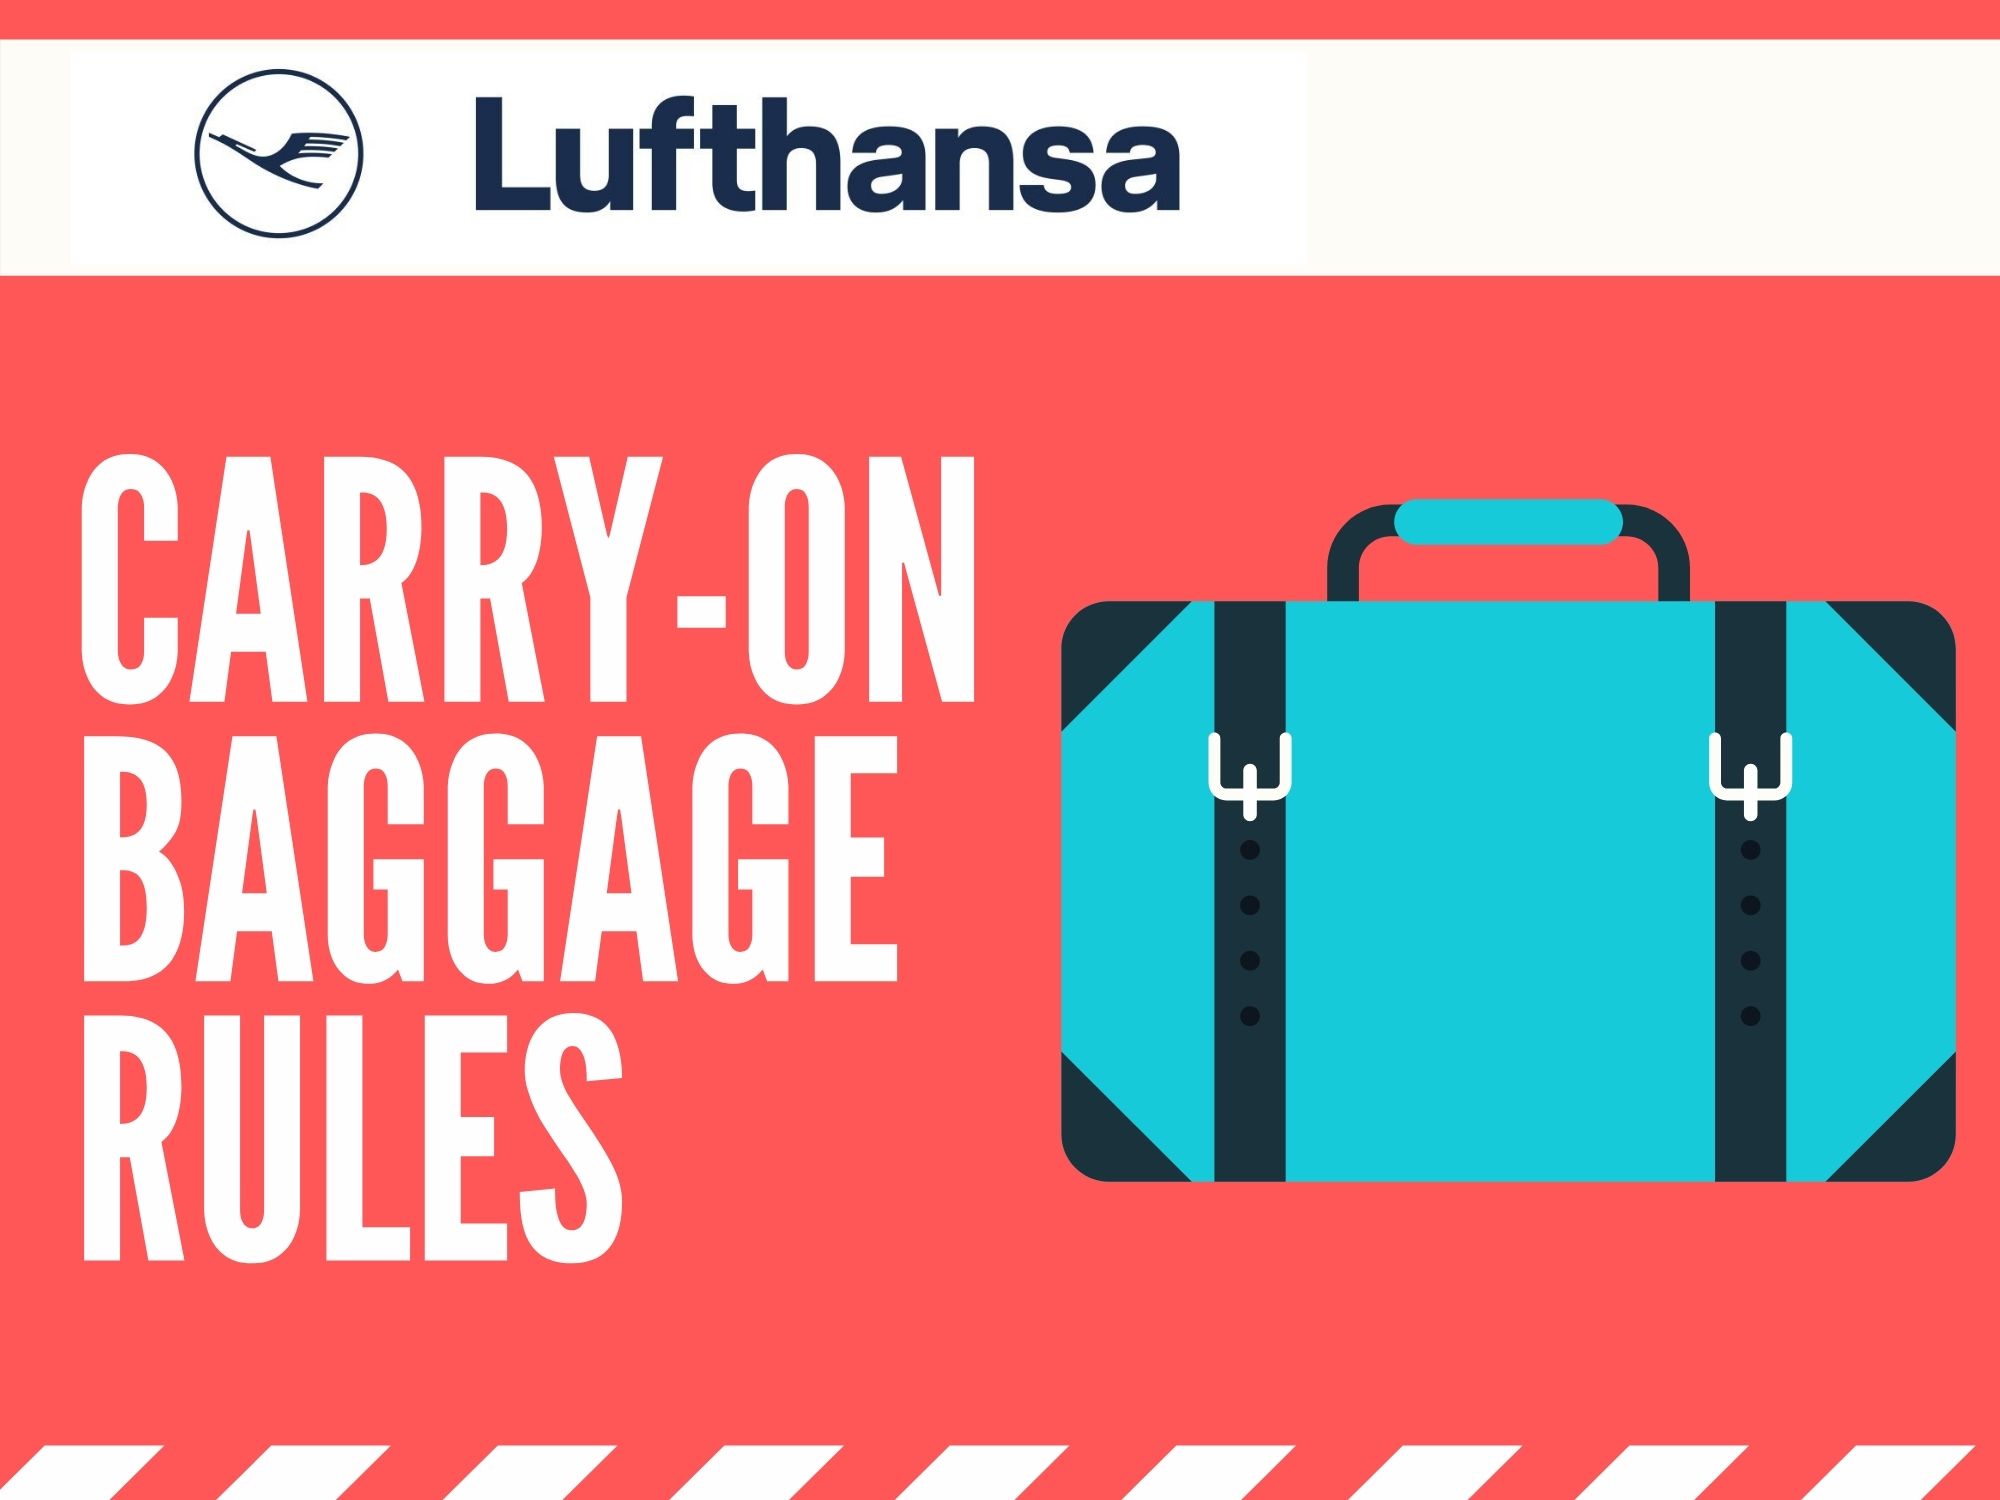 lufthansa frequent traveller baggage